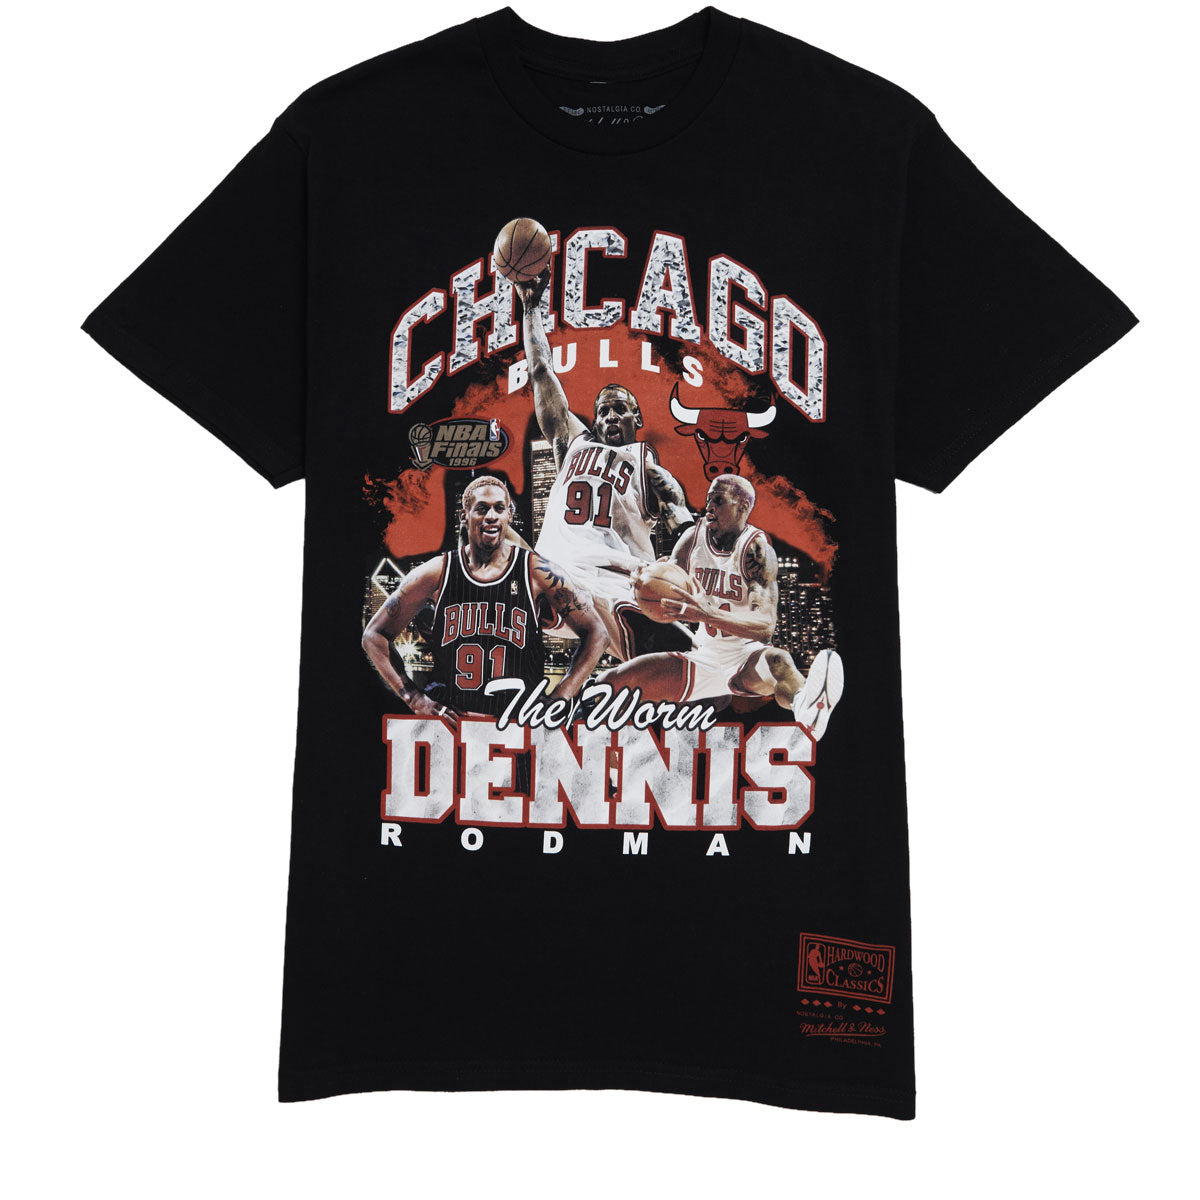 Mitchell & Ness x NBA Bling Bulls Dennis Rodman T-Shirt - Black image 1